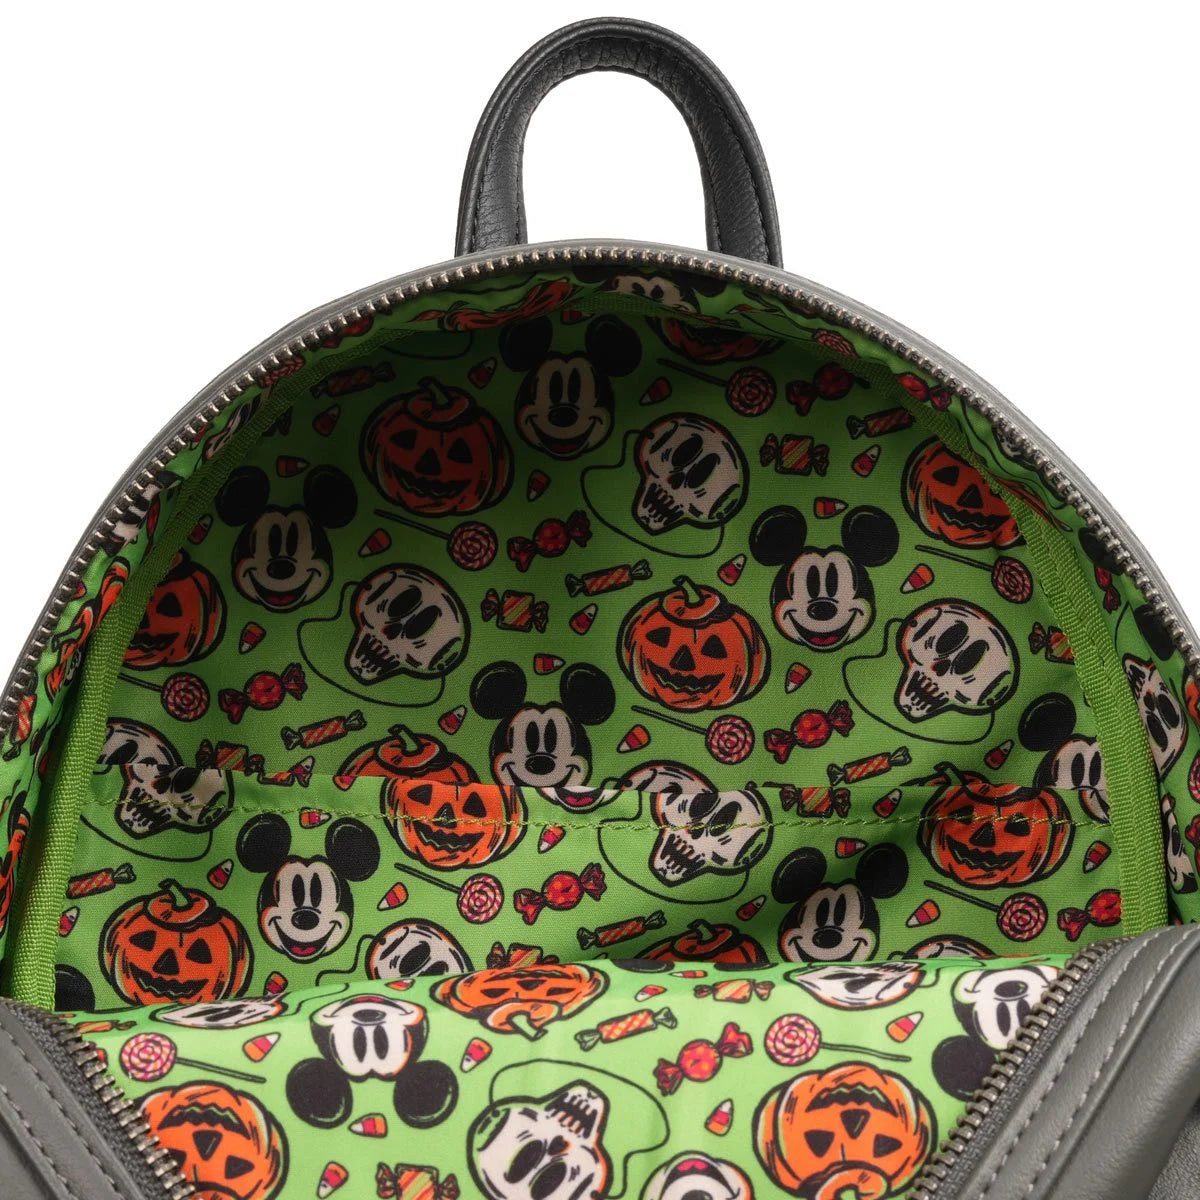 Loungefly Disney 100 Halloween Trick or Treaters Glow-in-the-Dark Mini-Backpack